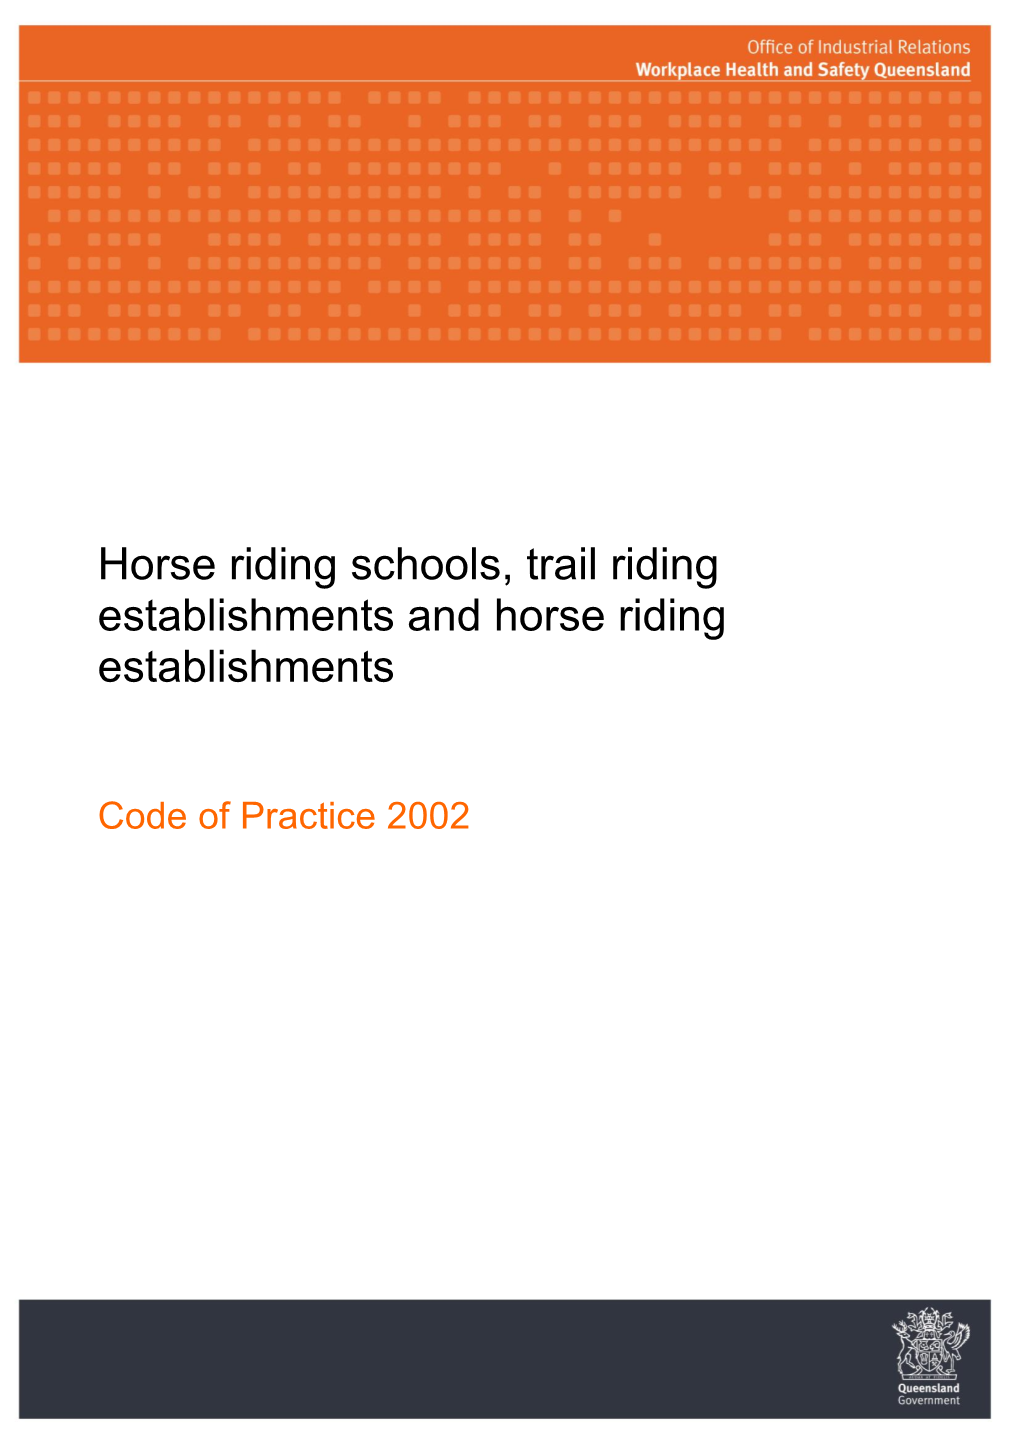 Horse Riding Schools, Trail Riding Establishments and Horse Riding Establishments